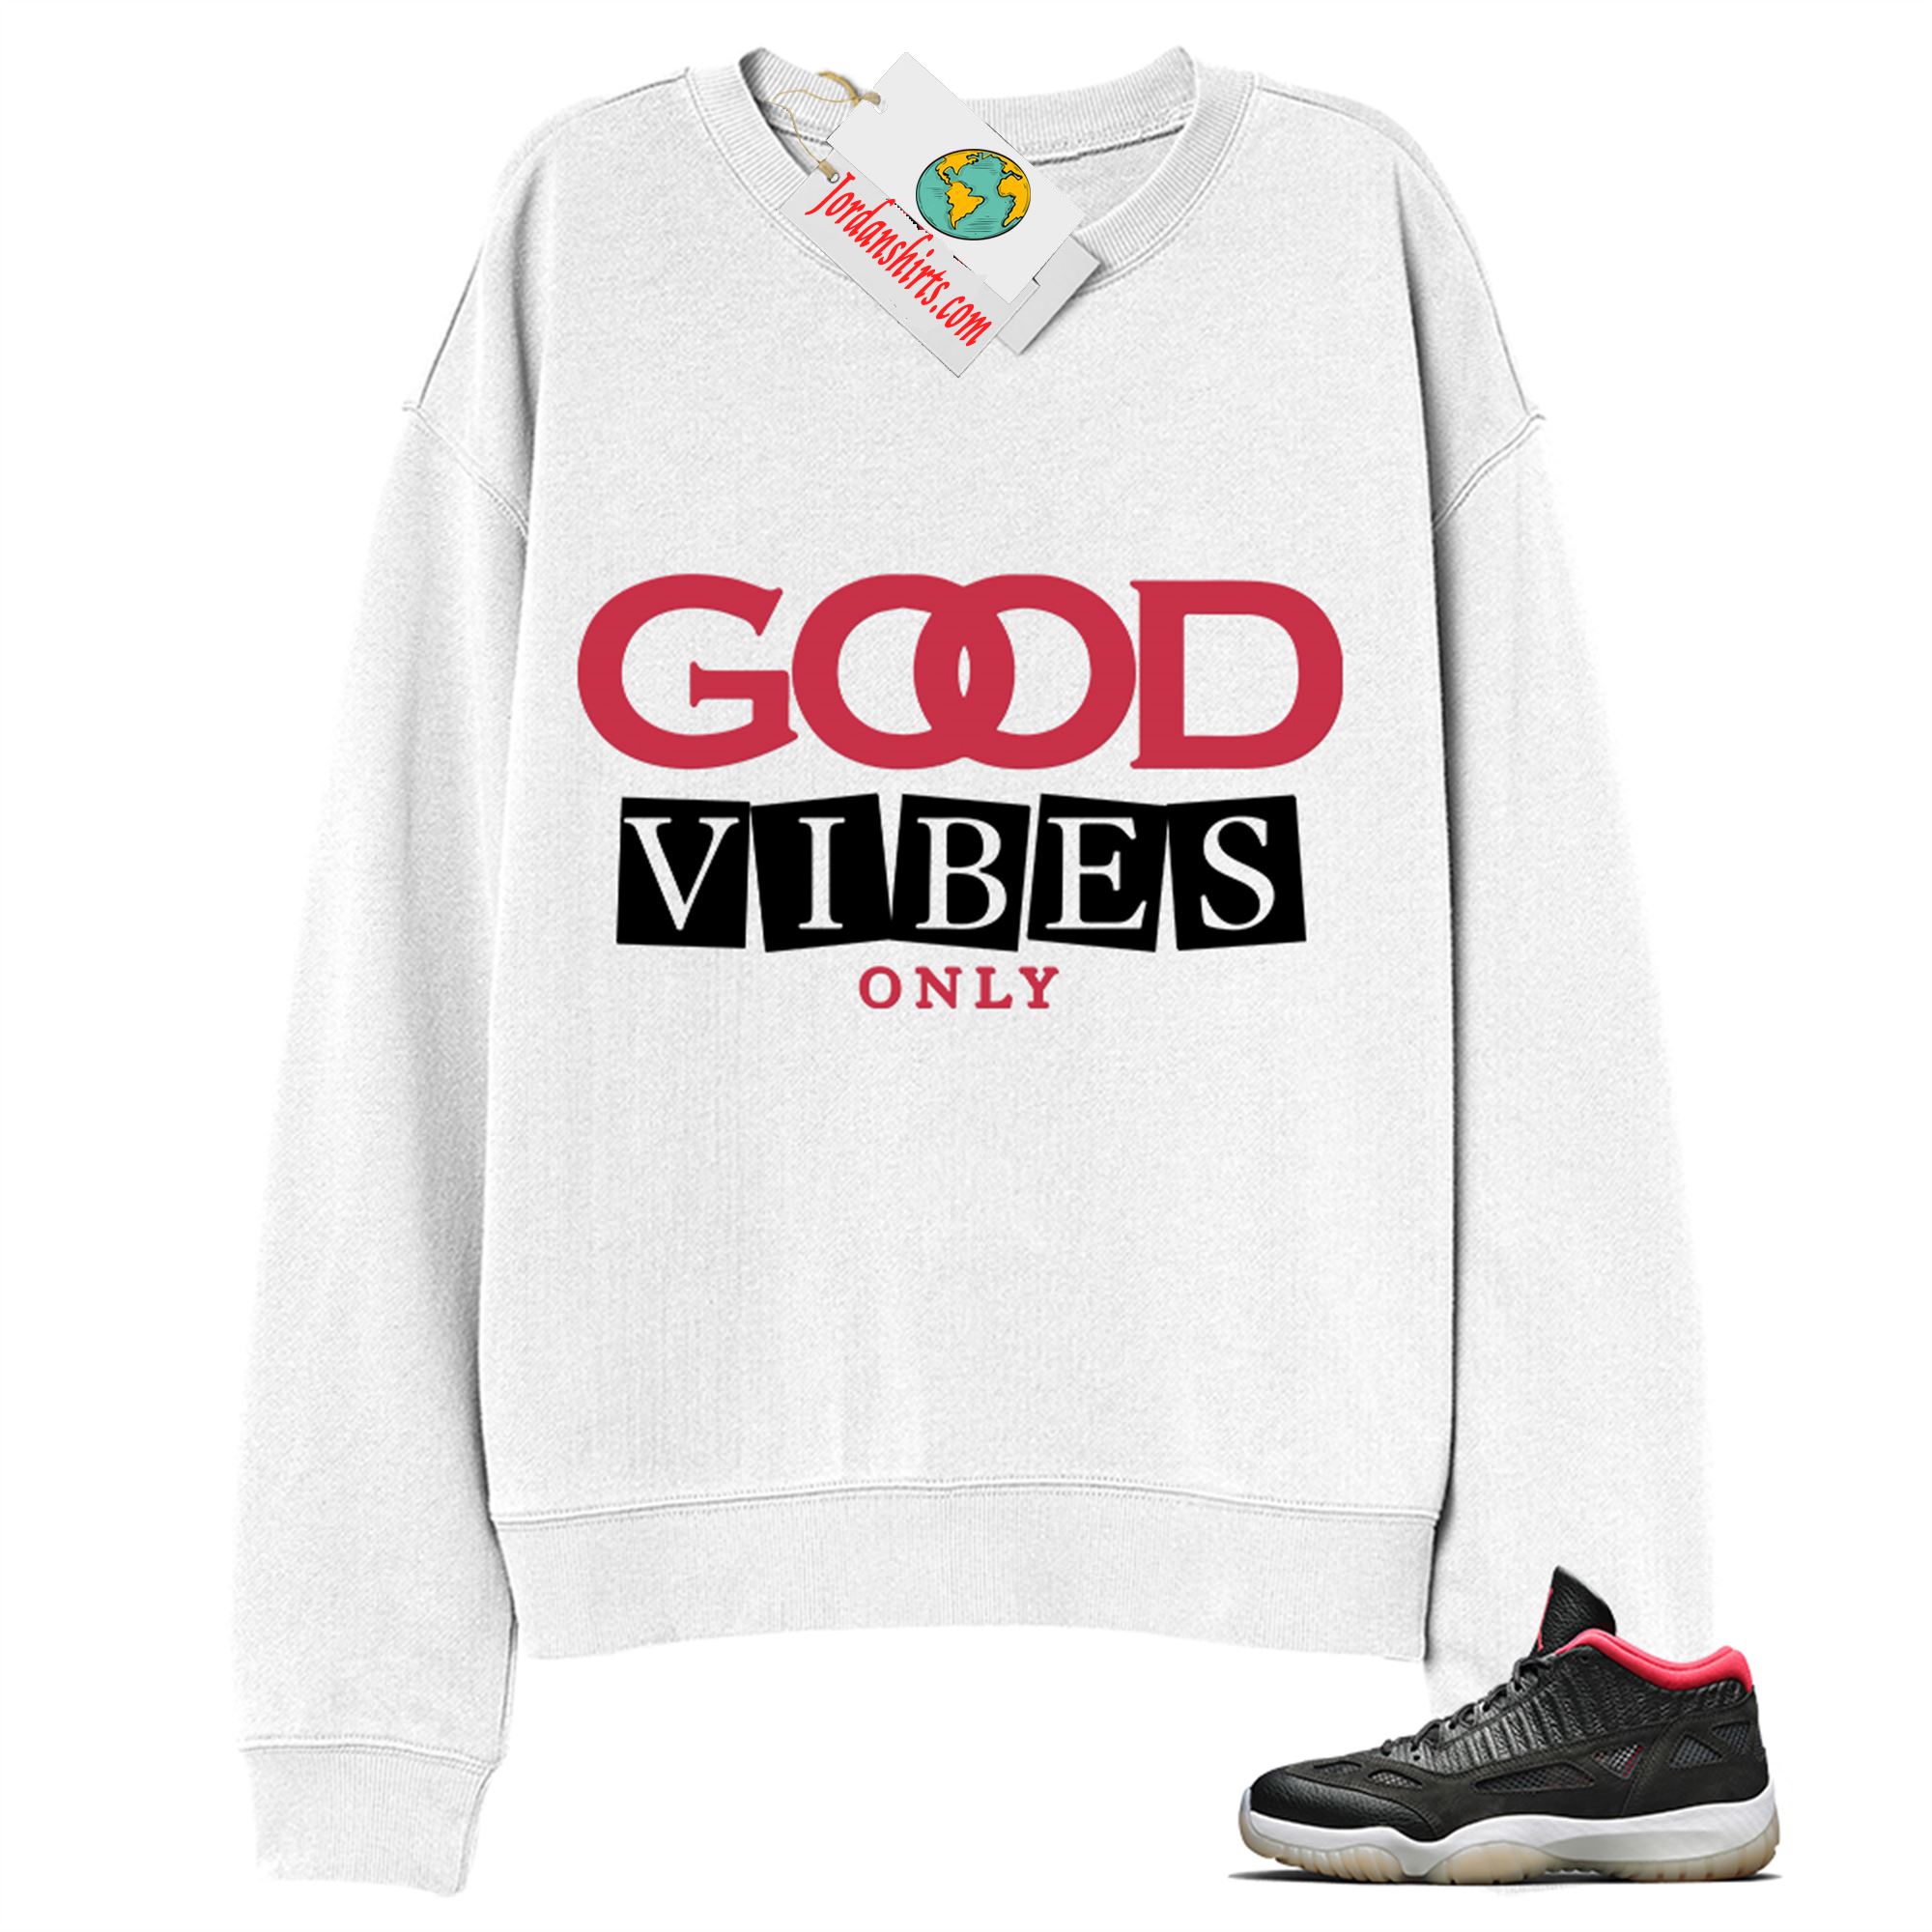 Jordan 11 Sweatshirt, Good Vibes Only White Sweatshirt Air Jordan 11 Bred 11s Size Up To 5xl